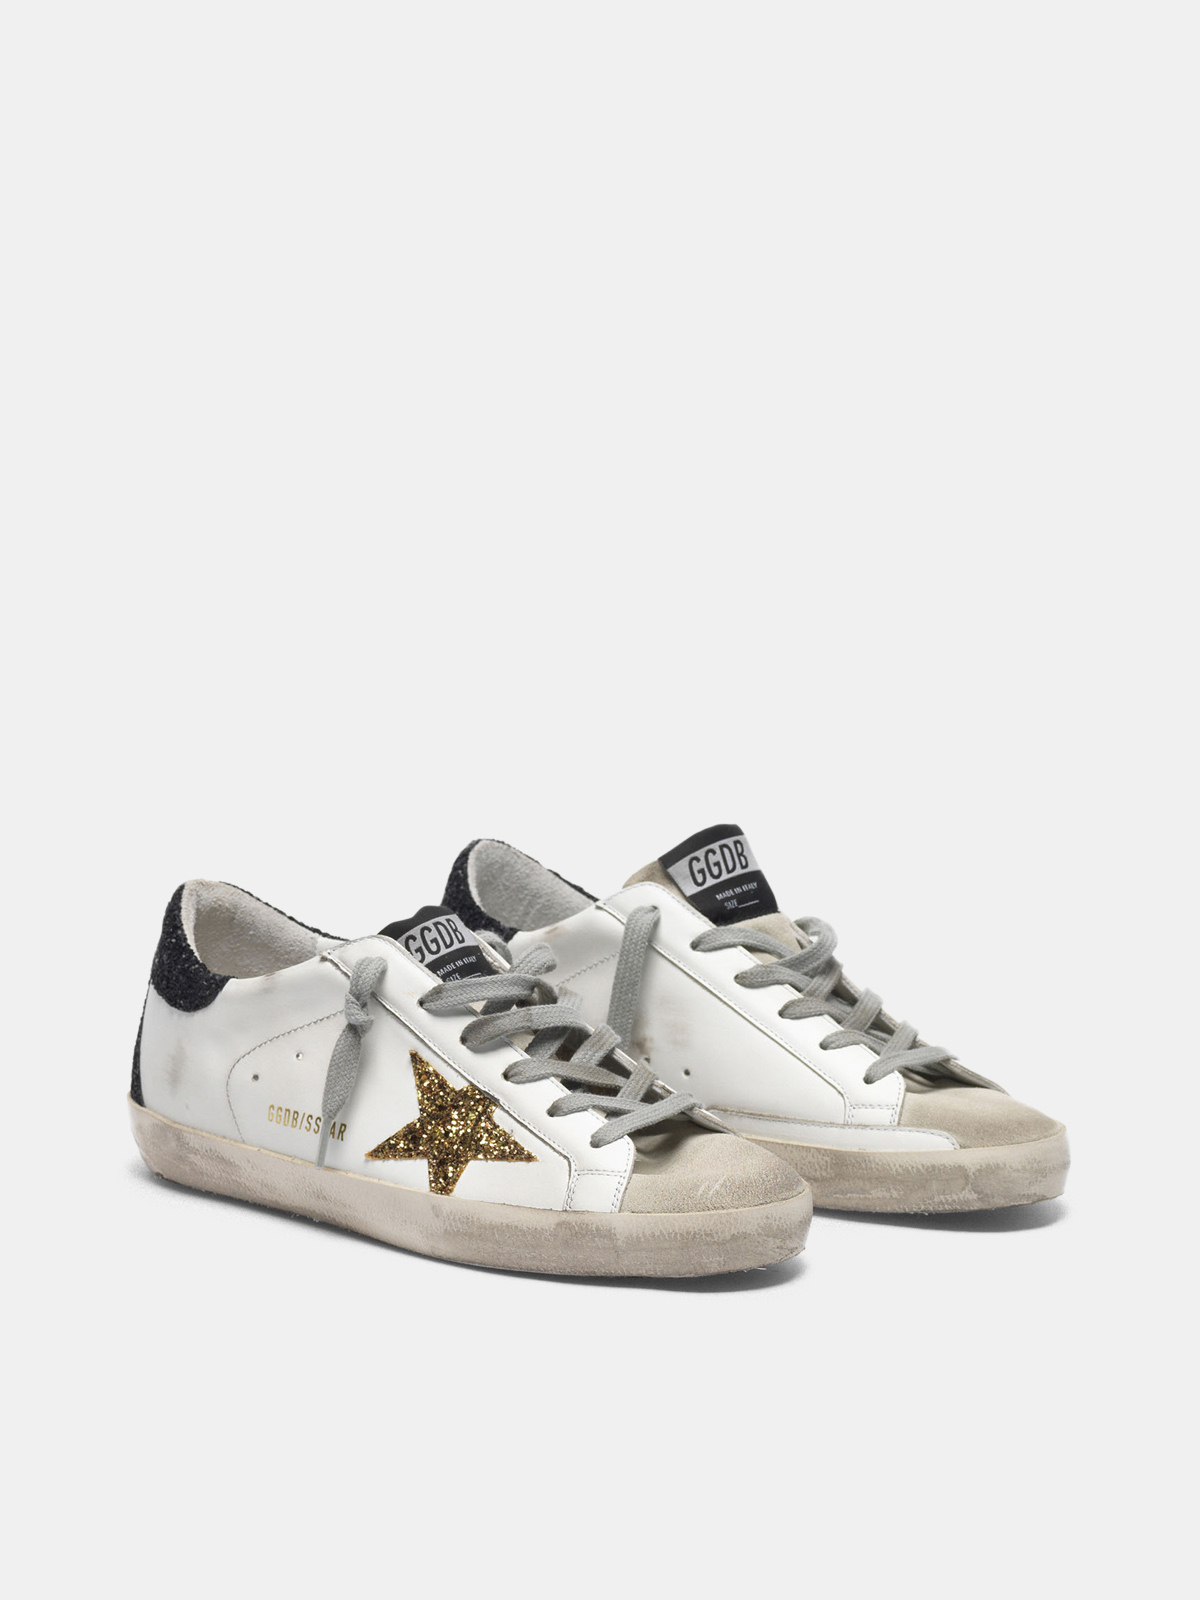 gold star and glittery black heel tab 